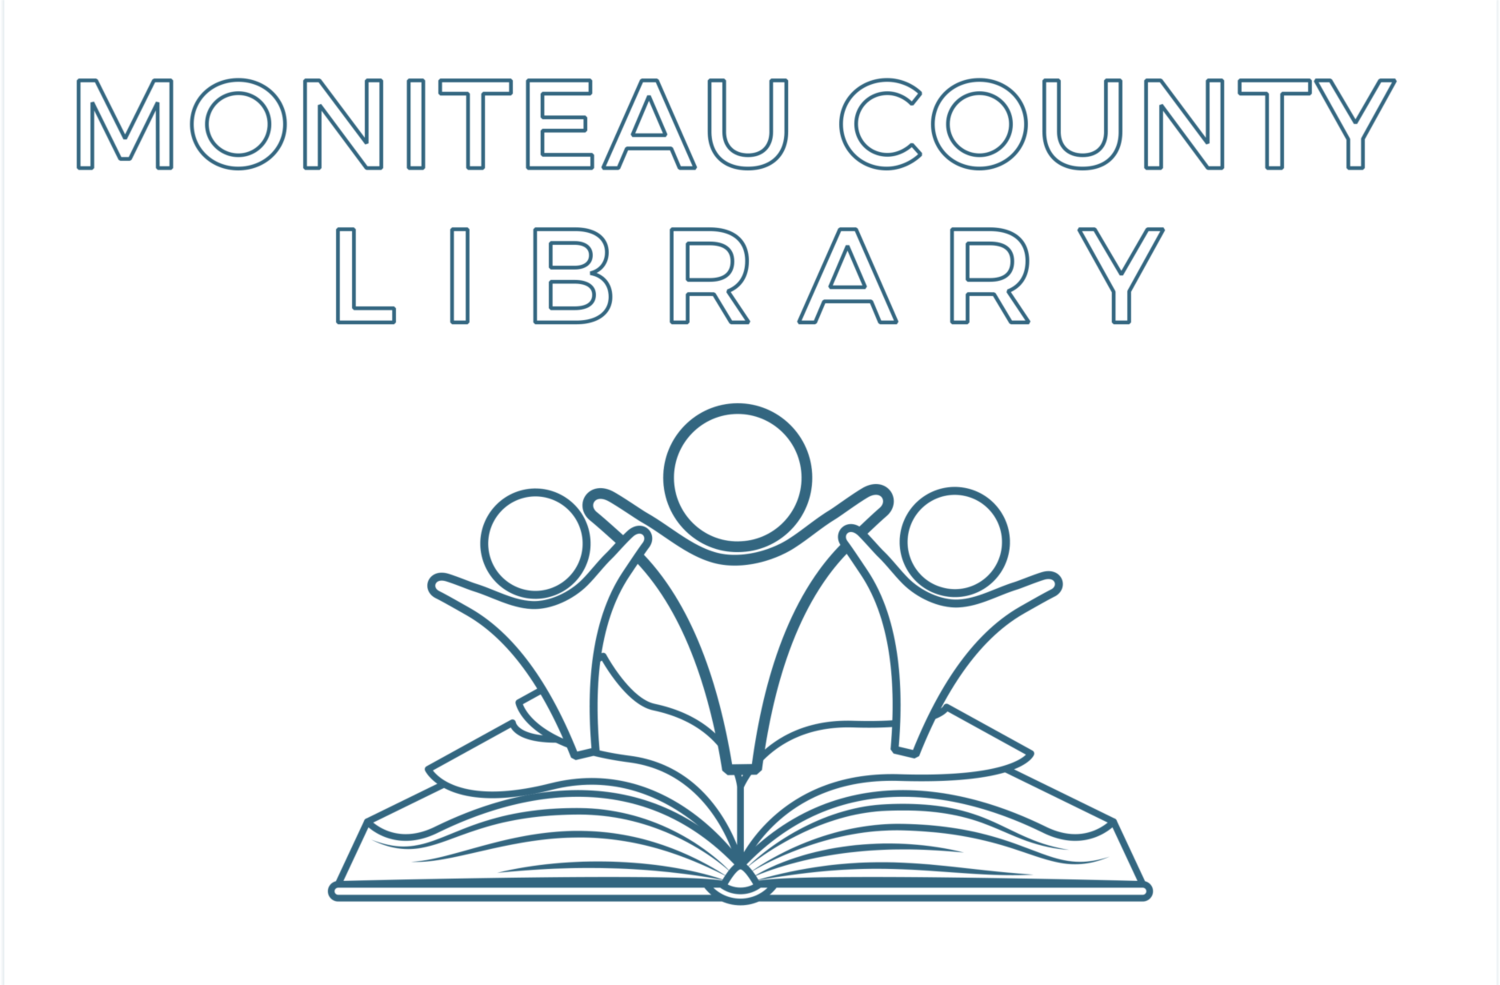 Moniteau County Library